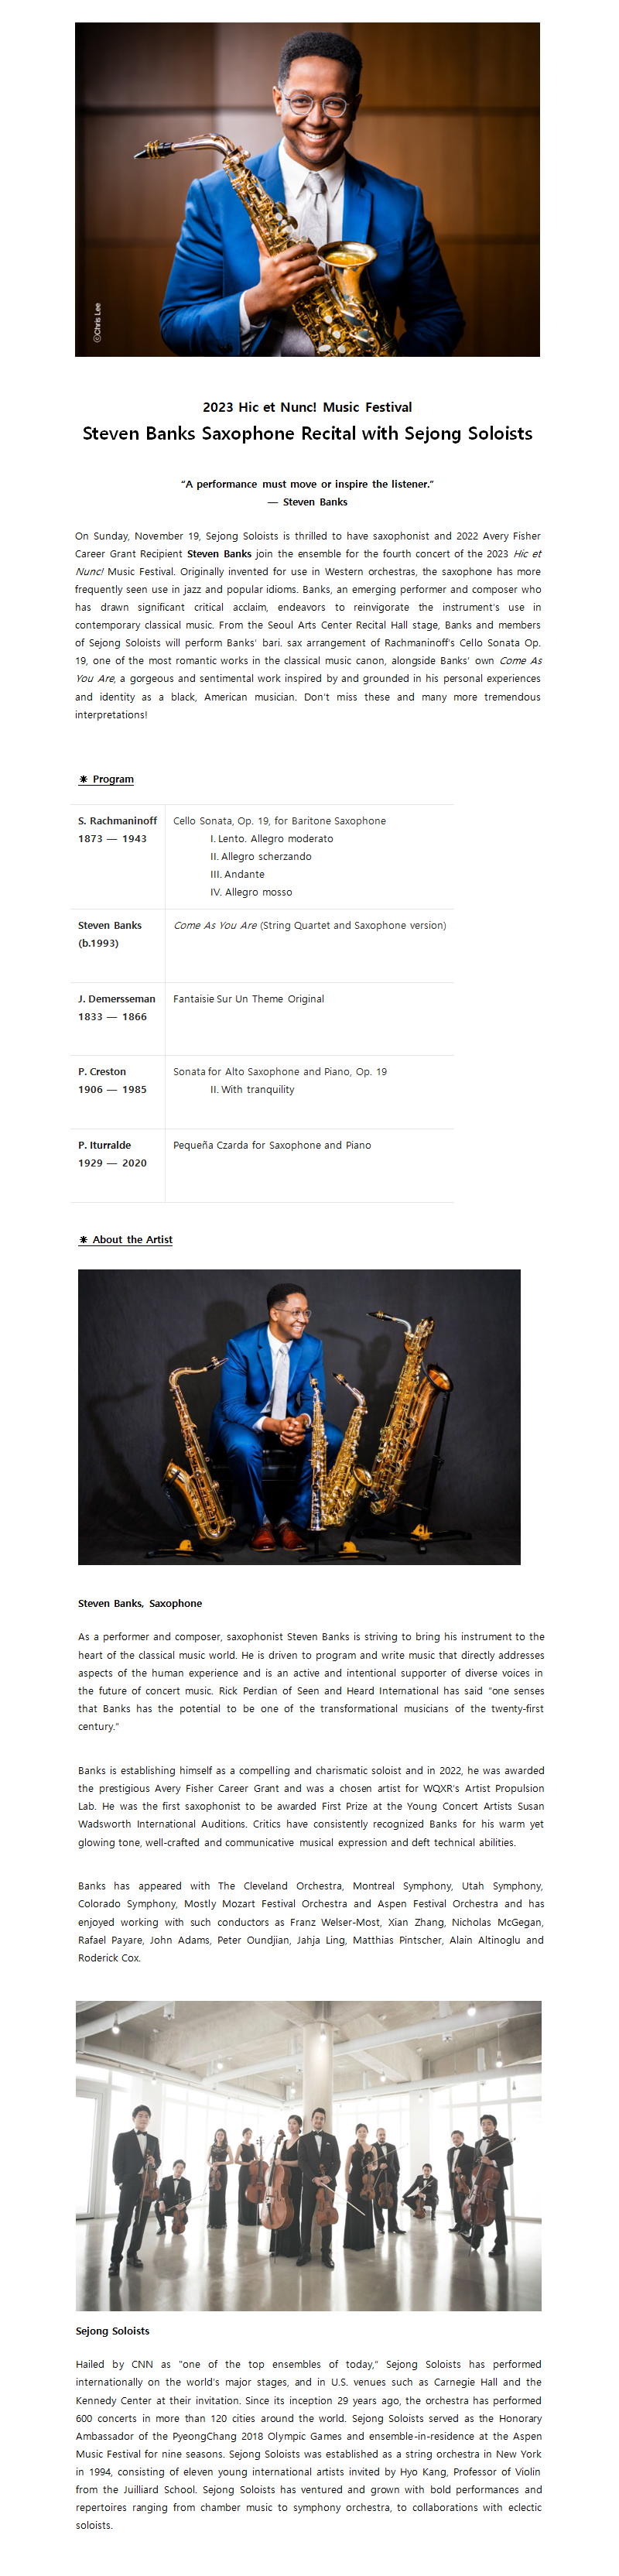 Steven Banks Saxophone Recital with Sejong Soloists